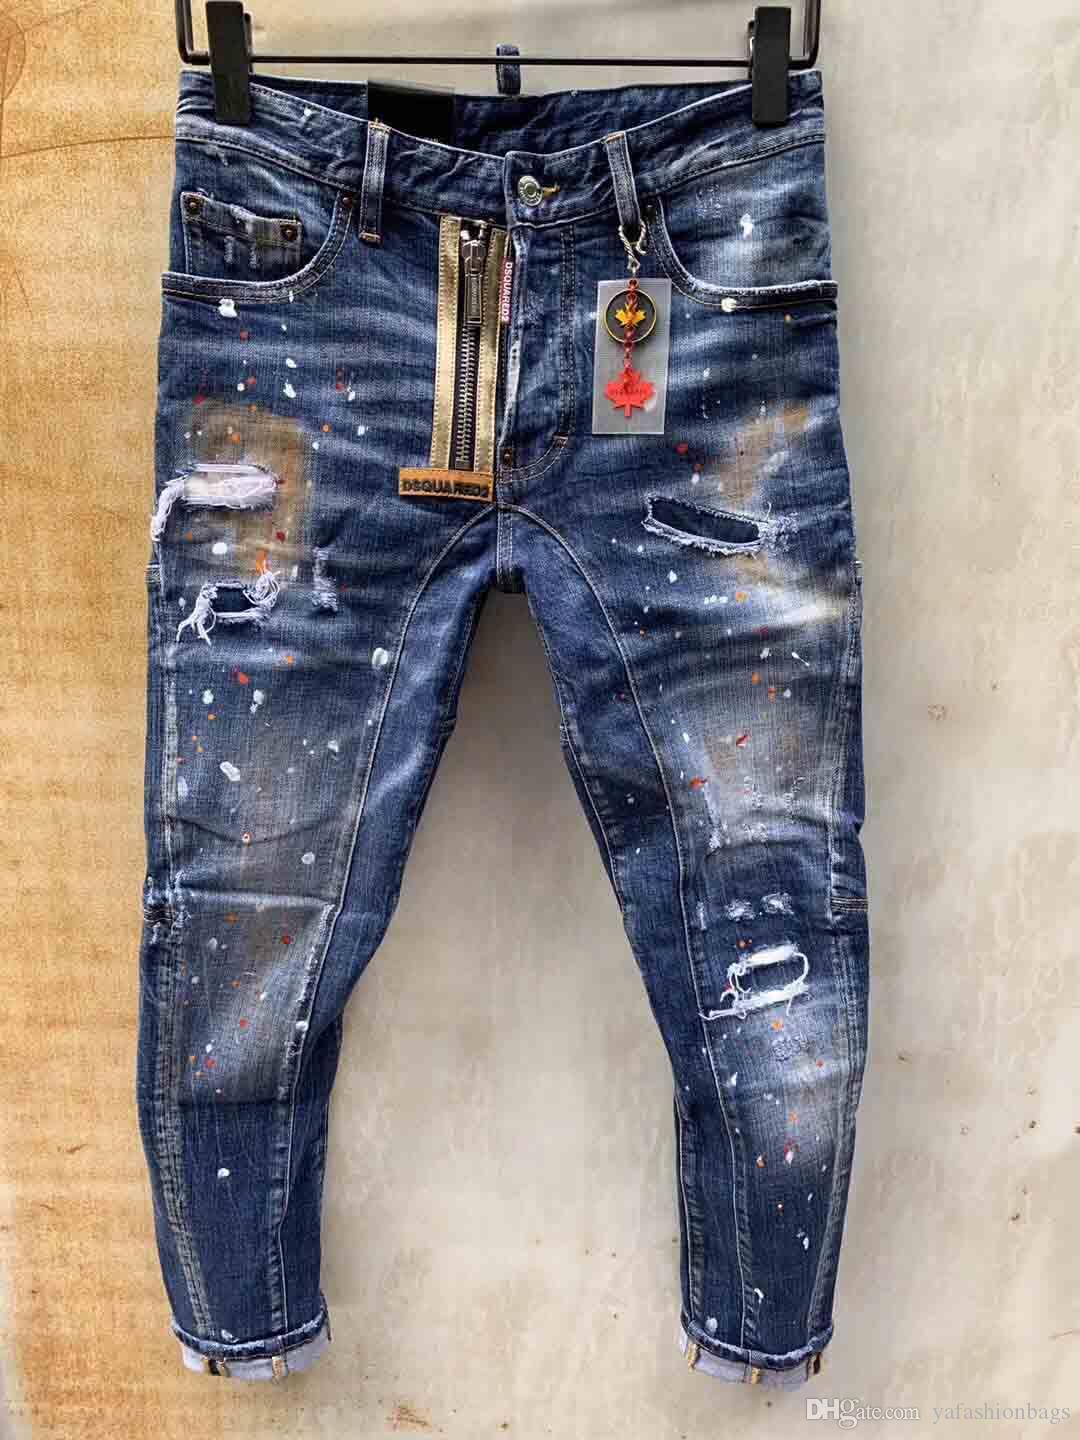 casquette dsquared jeans